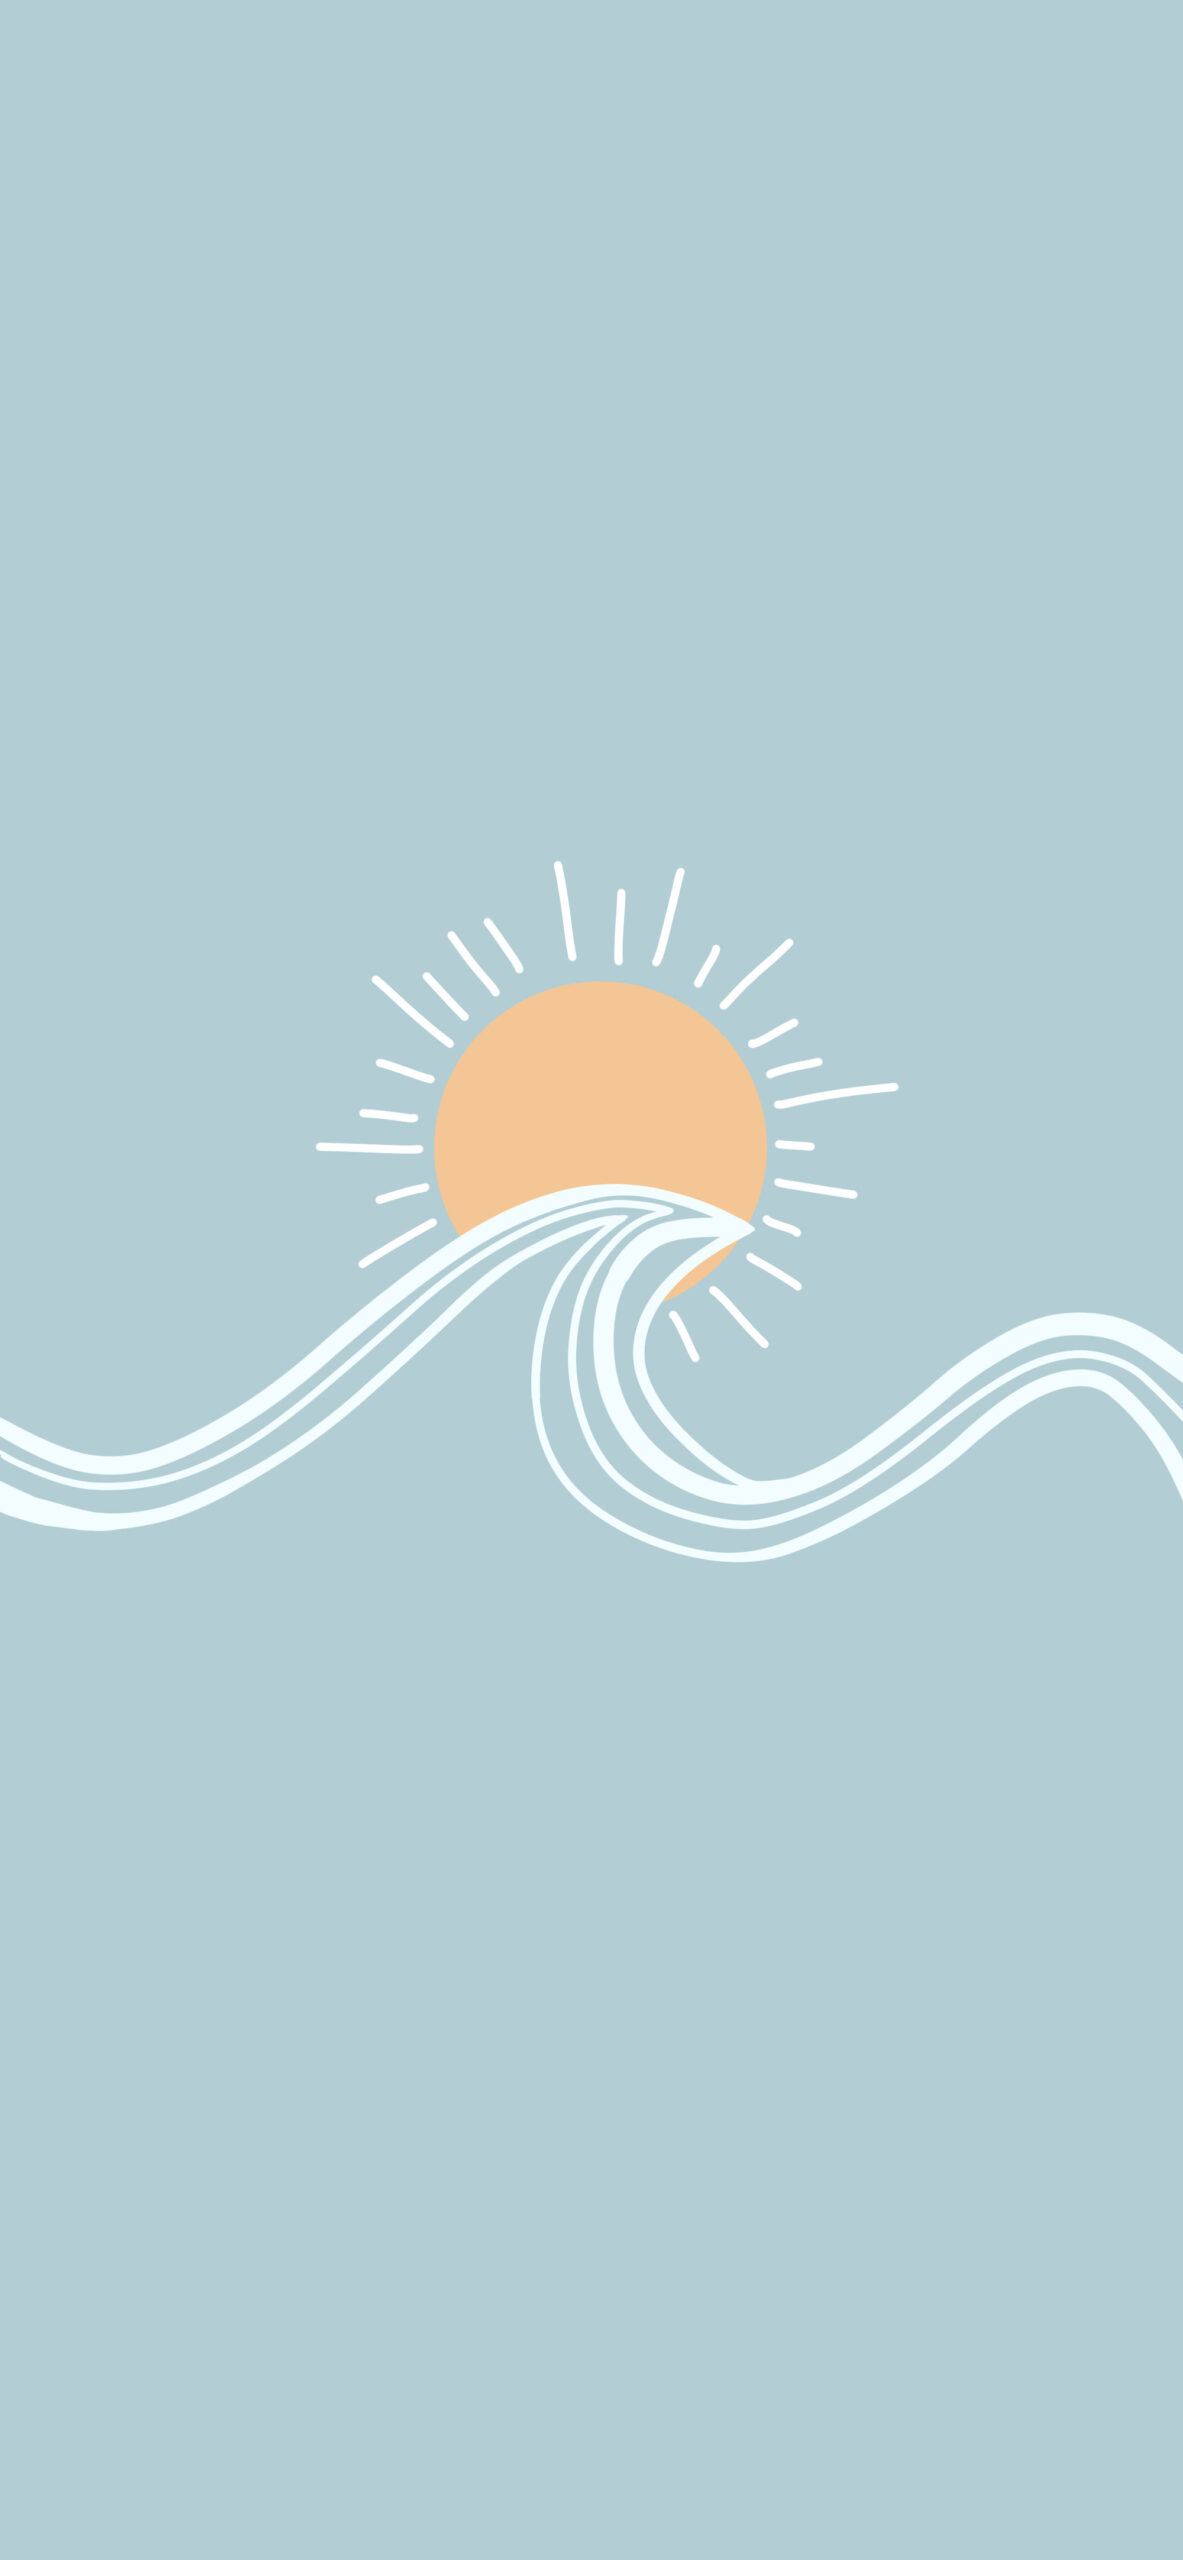  Einfach Hintergrundbild 1183x2560. Sun and Wave Blue Wallpaper Aesthetic Wallpaper for iPhone